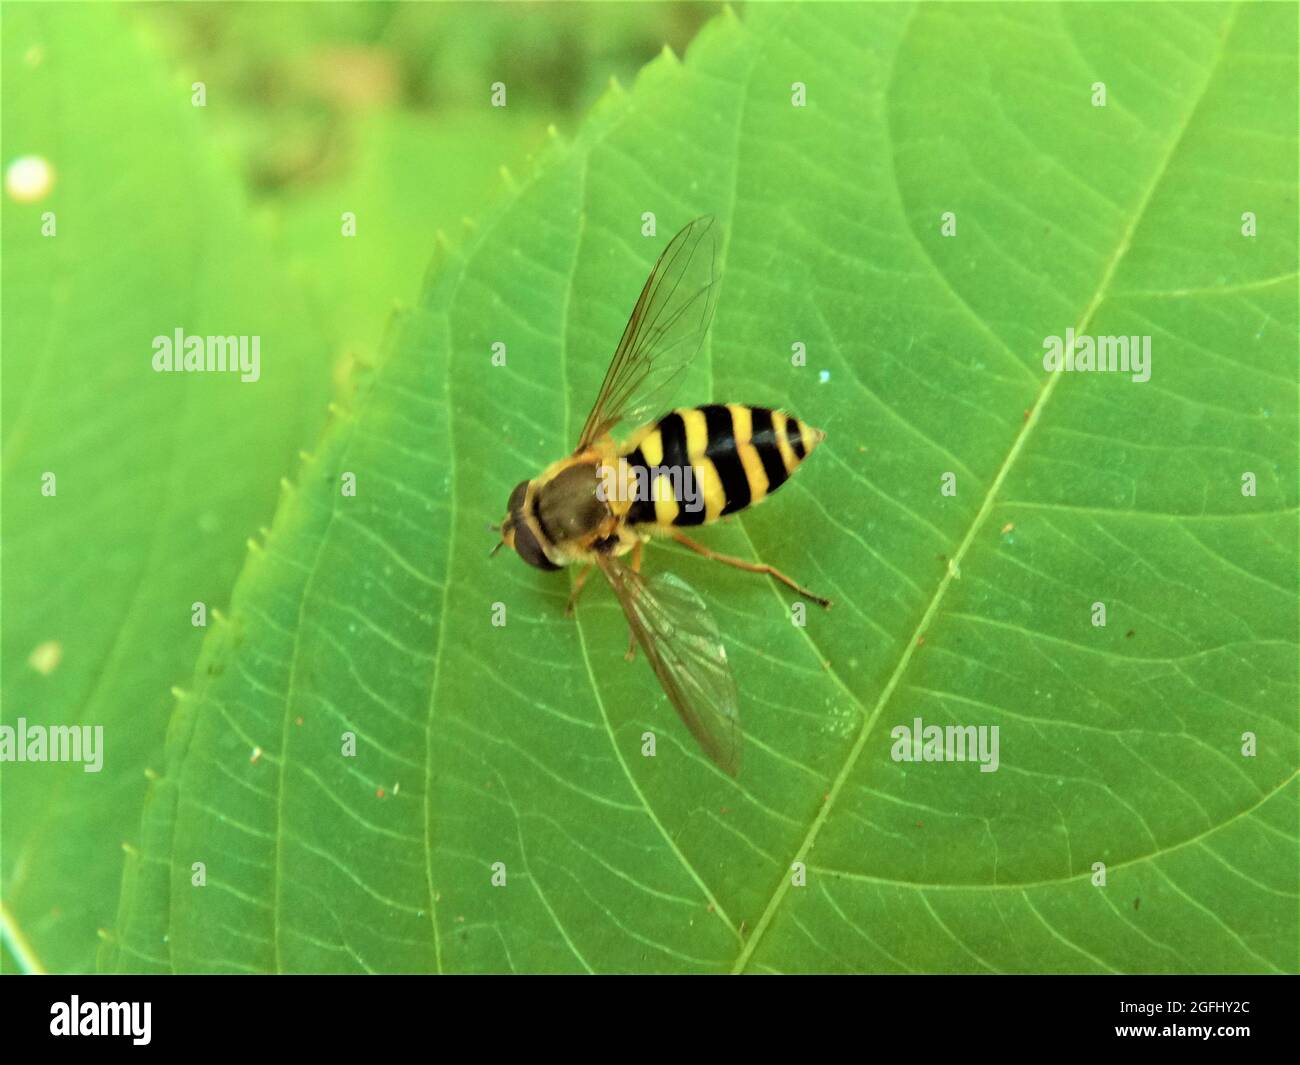 Nahaufnahme Insekt Biene auf grünem Blatt Foto Stock